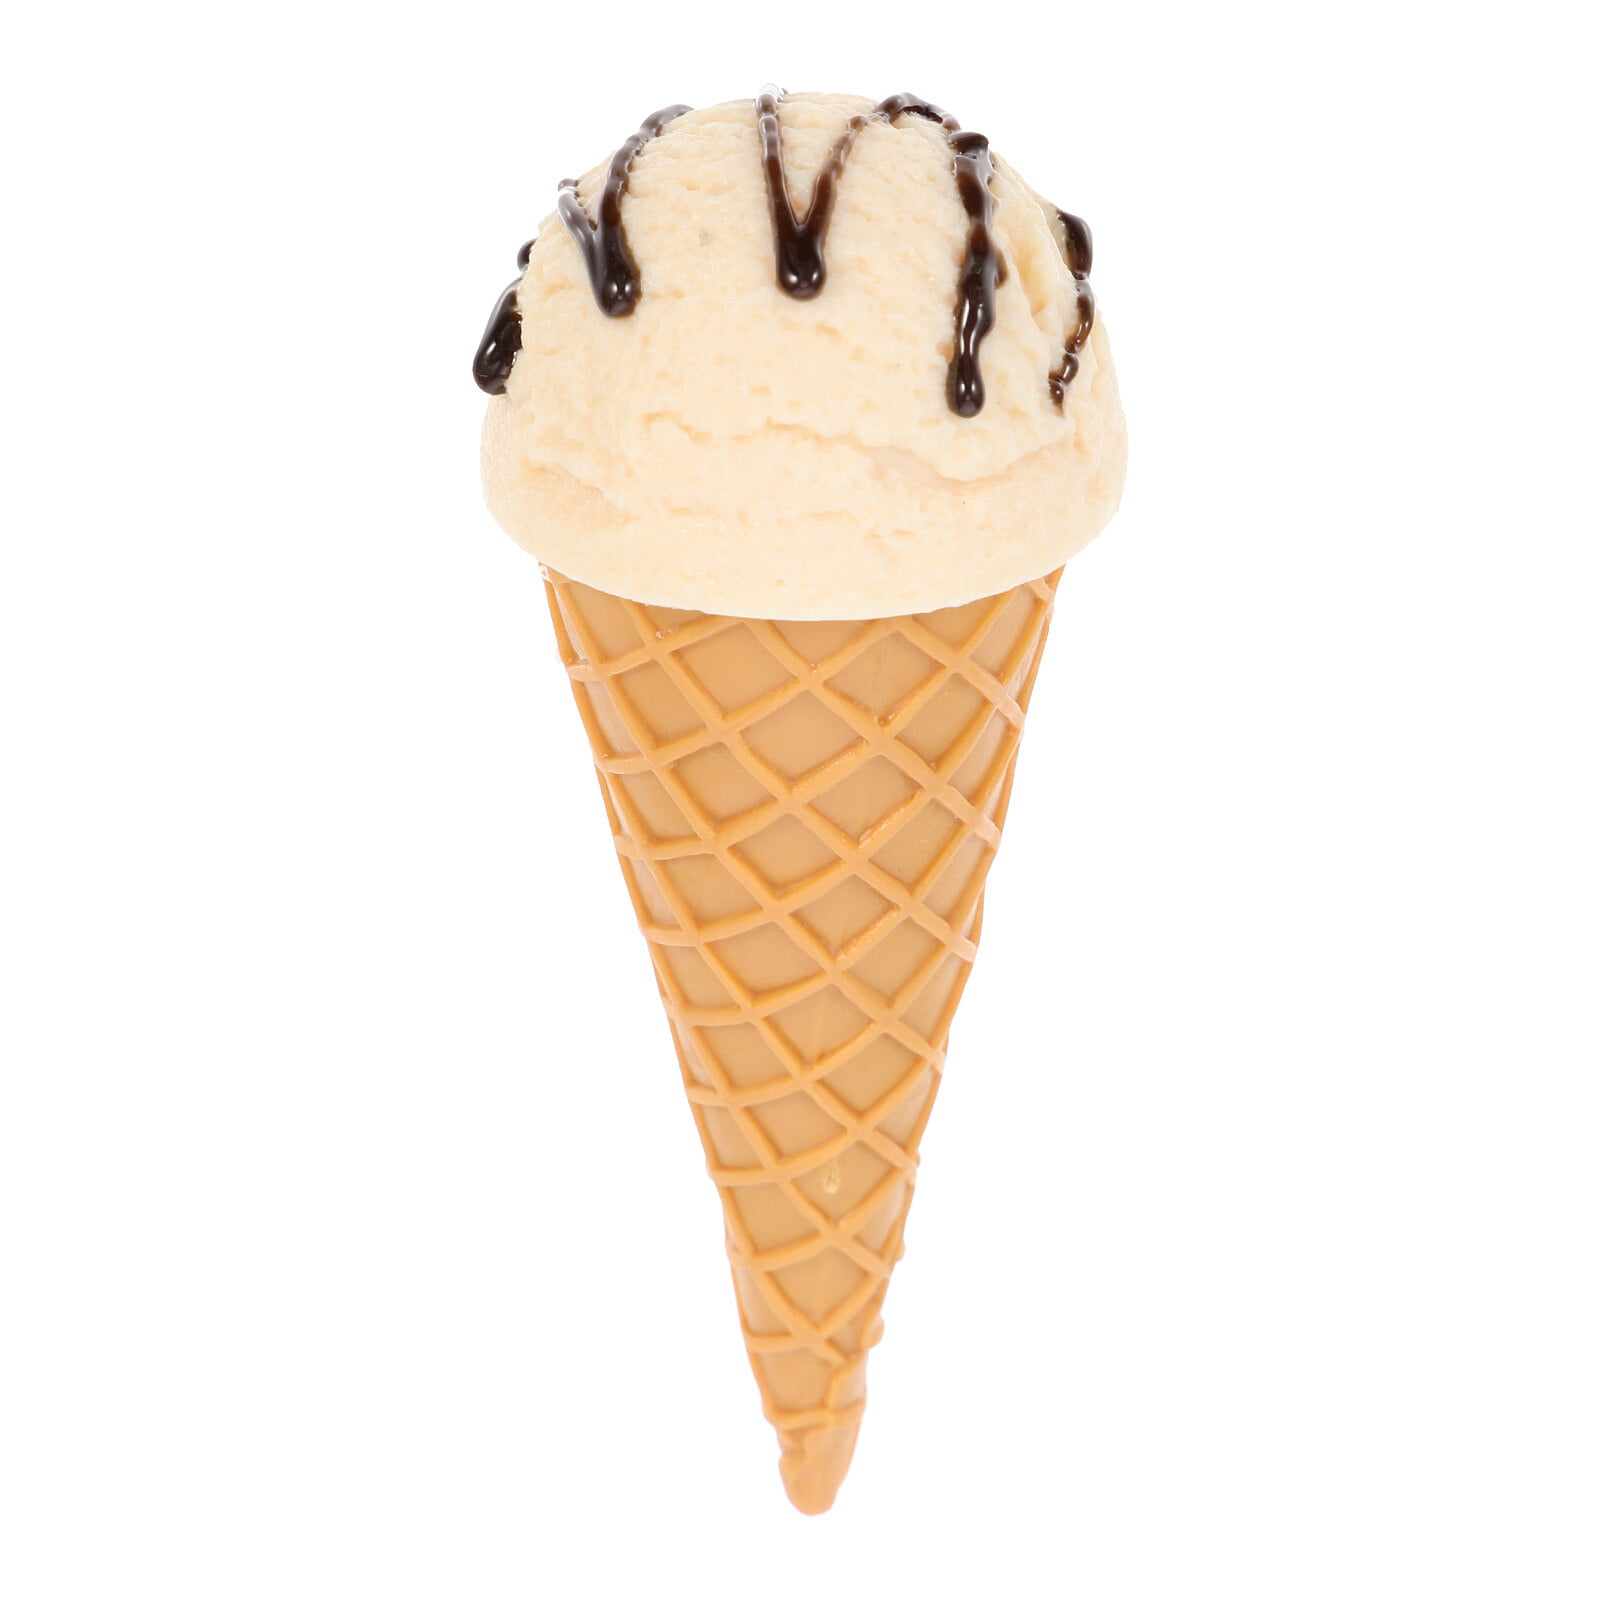  Fake Ice Cream Double Scoop Vanilla on Sugar Cone Faux